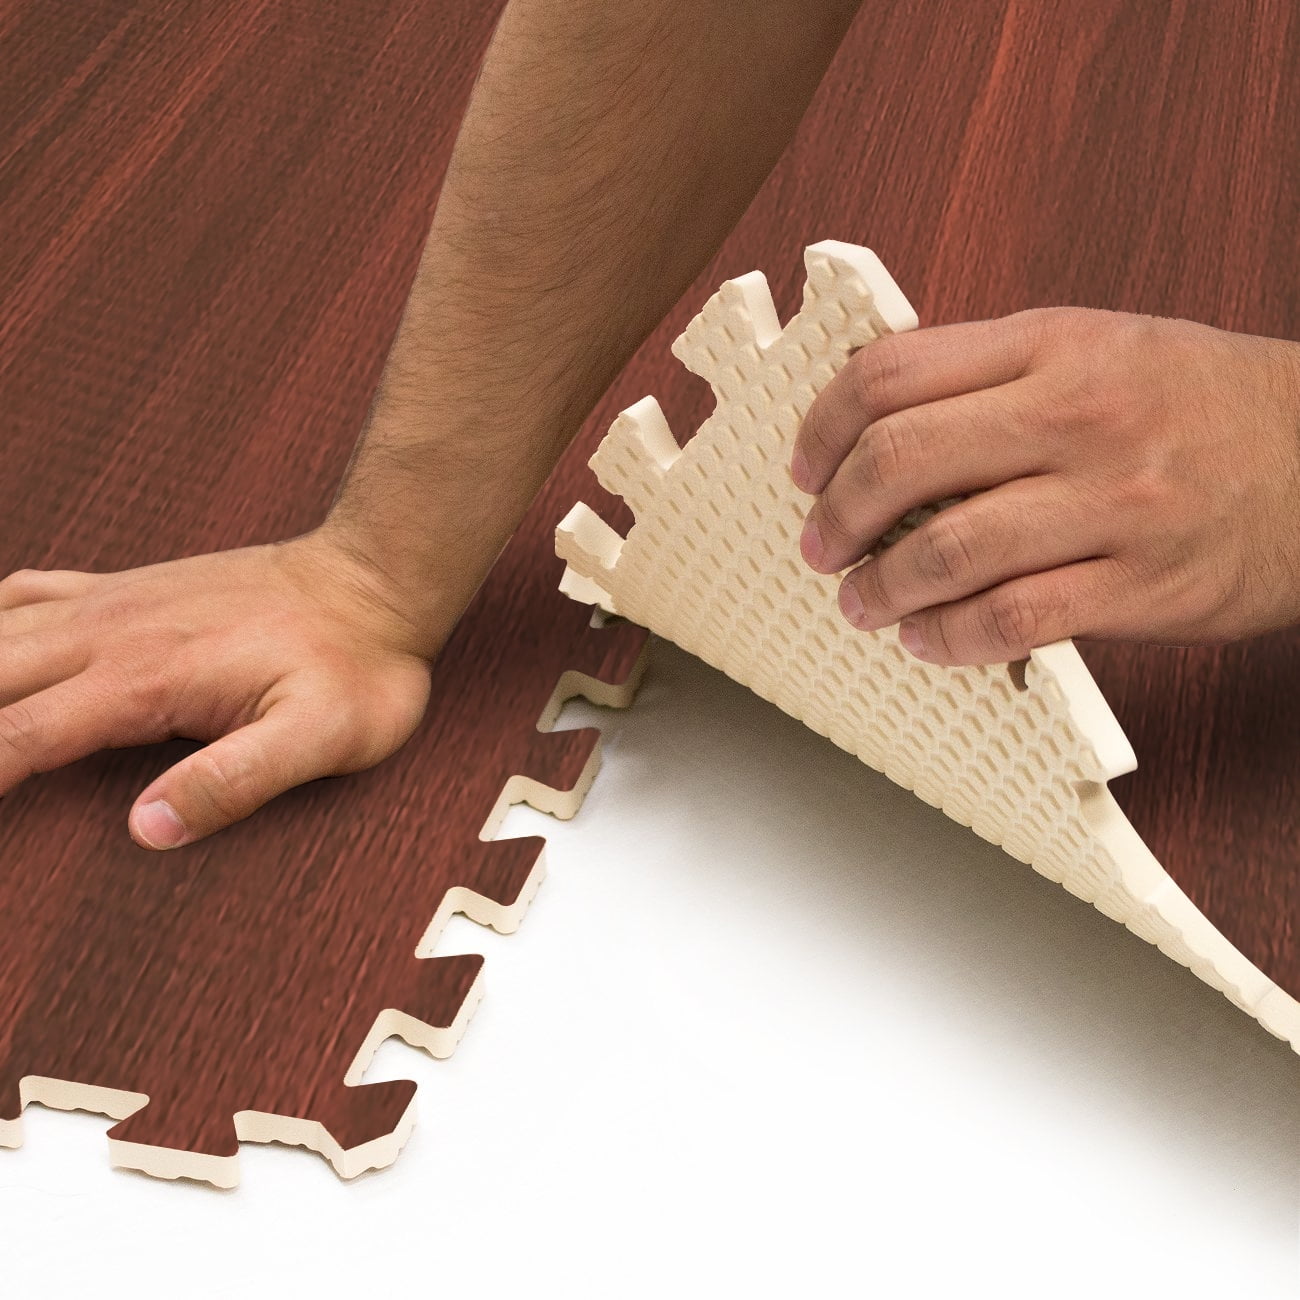 8' x 10' Sprung Ash Wood Anti Fatigue Standing Desk Floor Mat with Ramps -  O'Mara Sprung Floors